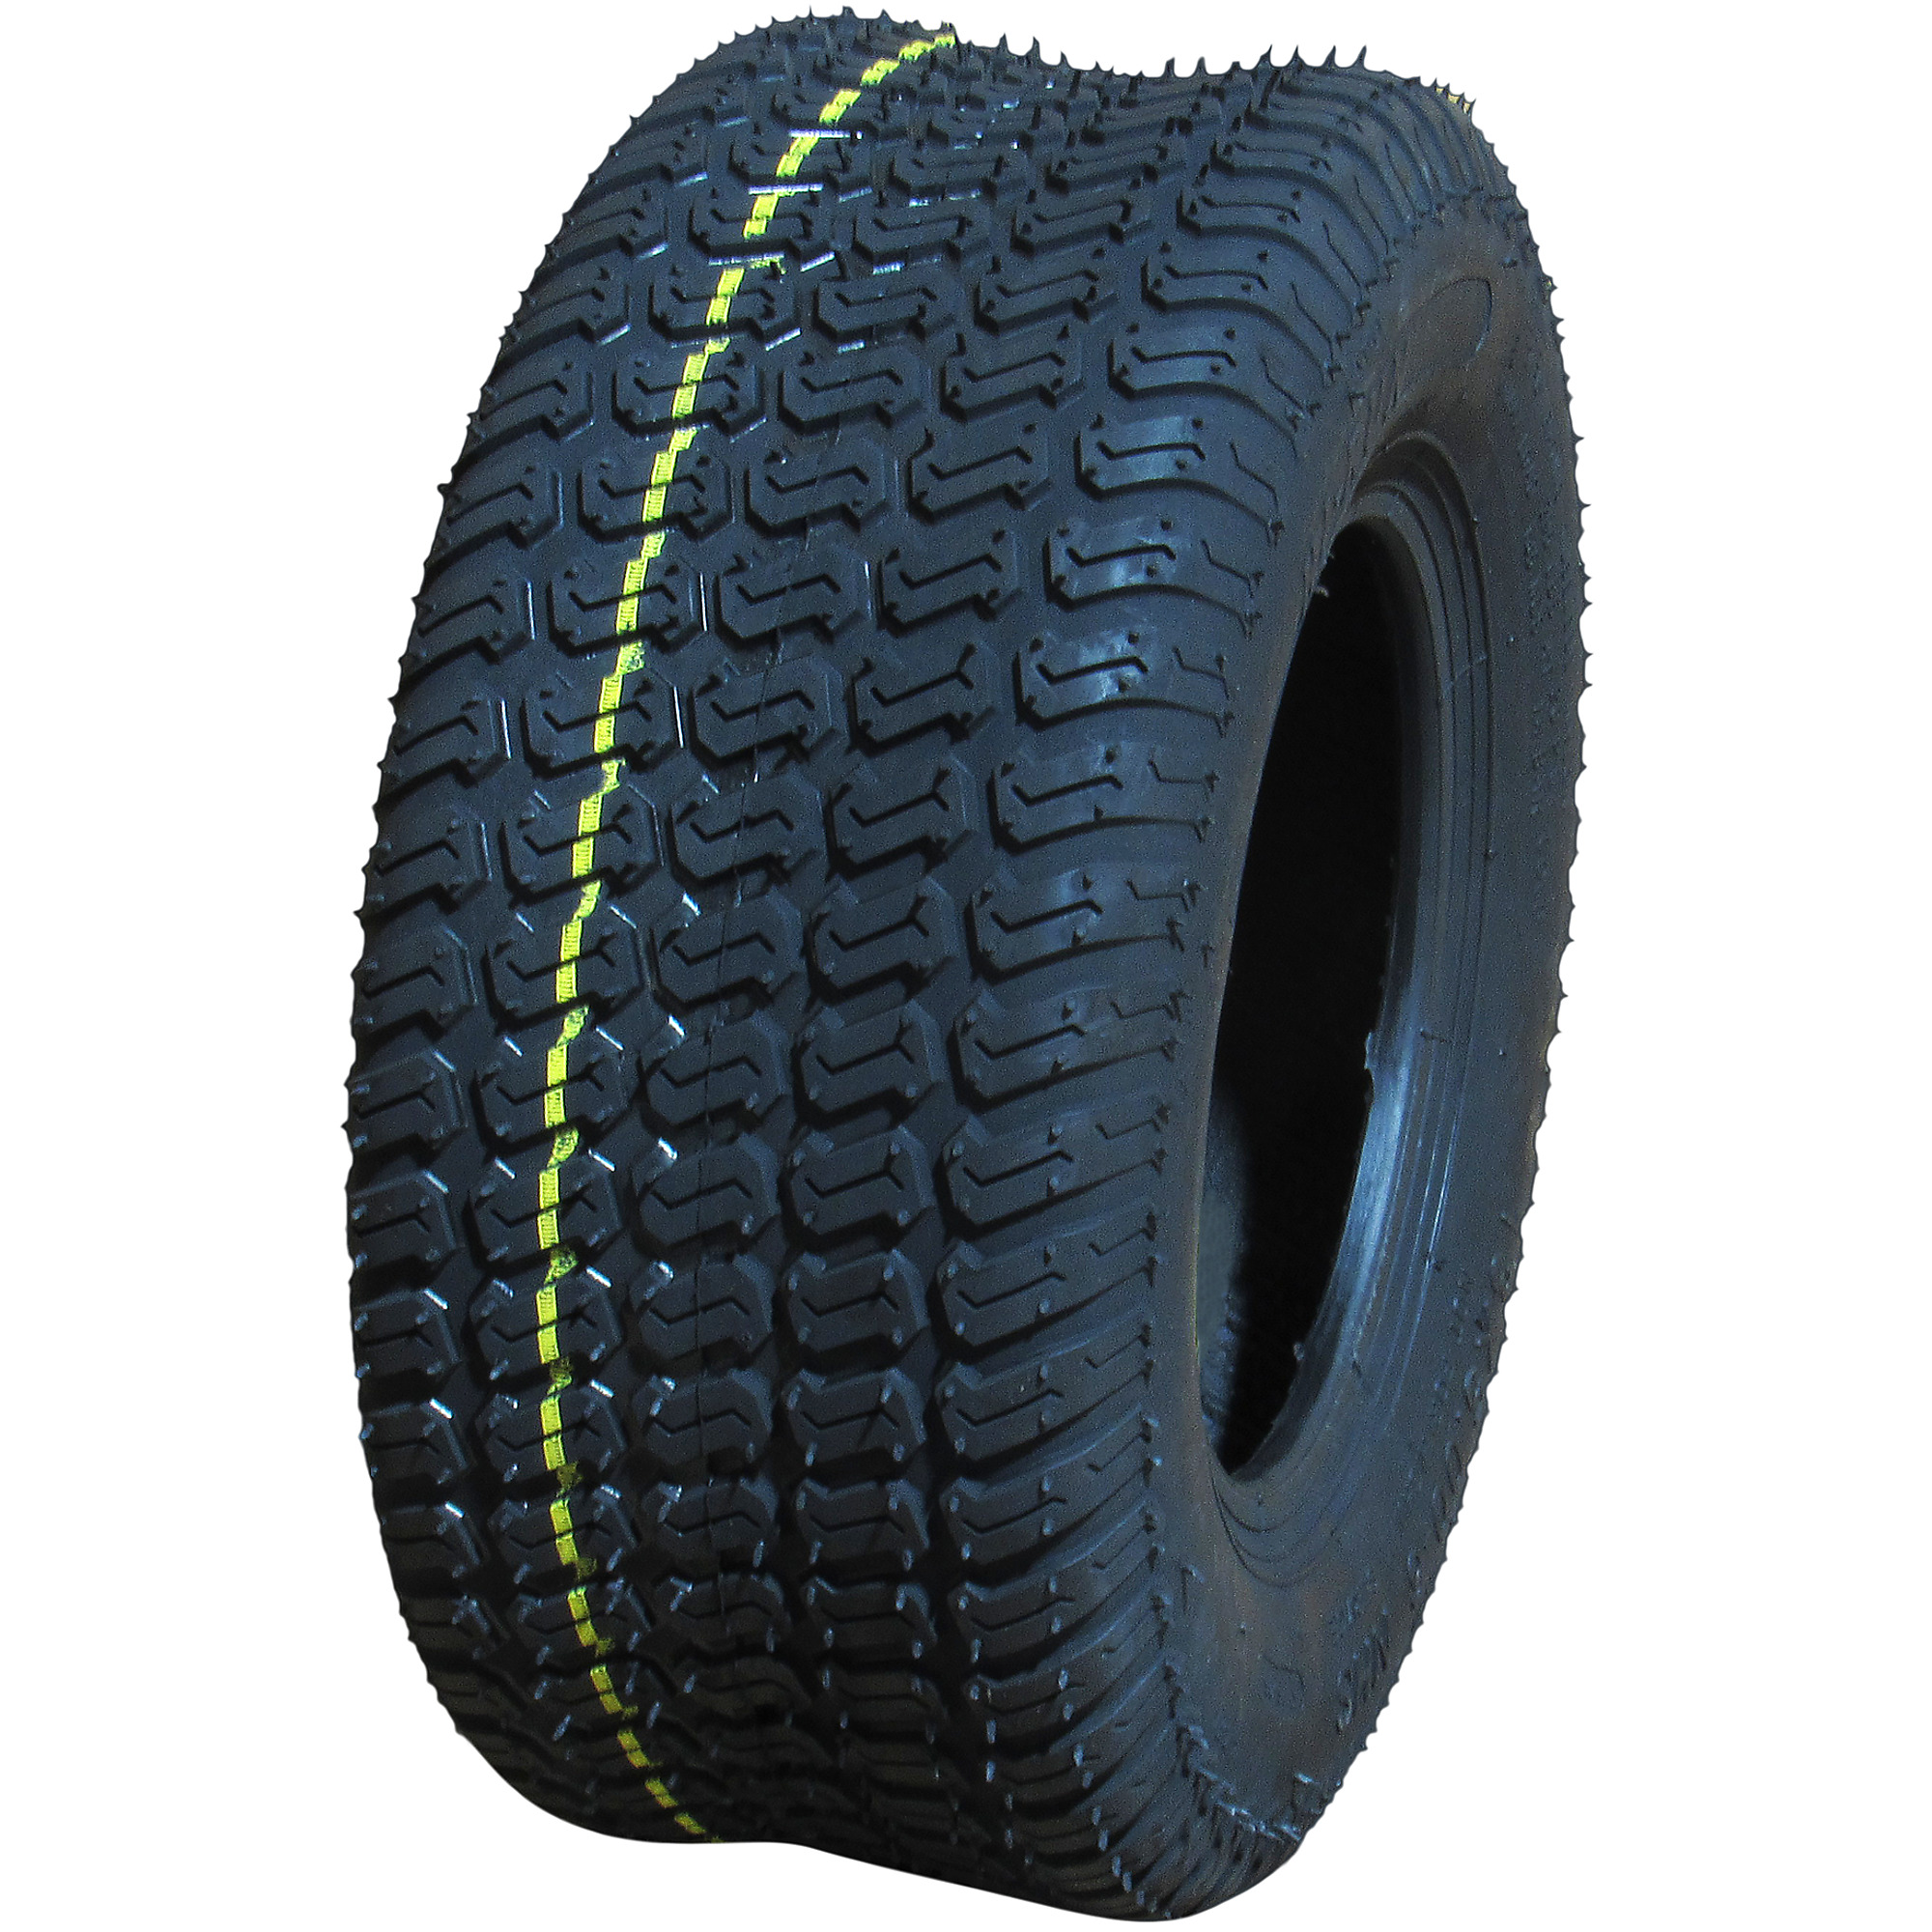 HI-RUN, Lawn Garden Tire, SU05 Turf, Tire Size 13X5.00-6 Load Range Rating A, Model WD1031